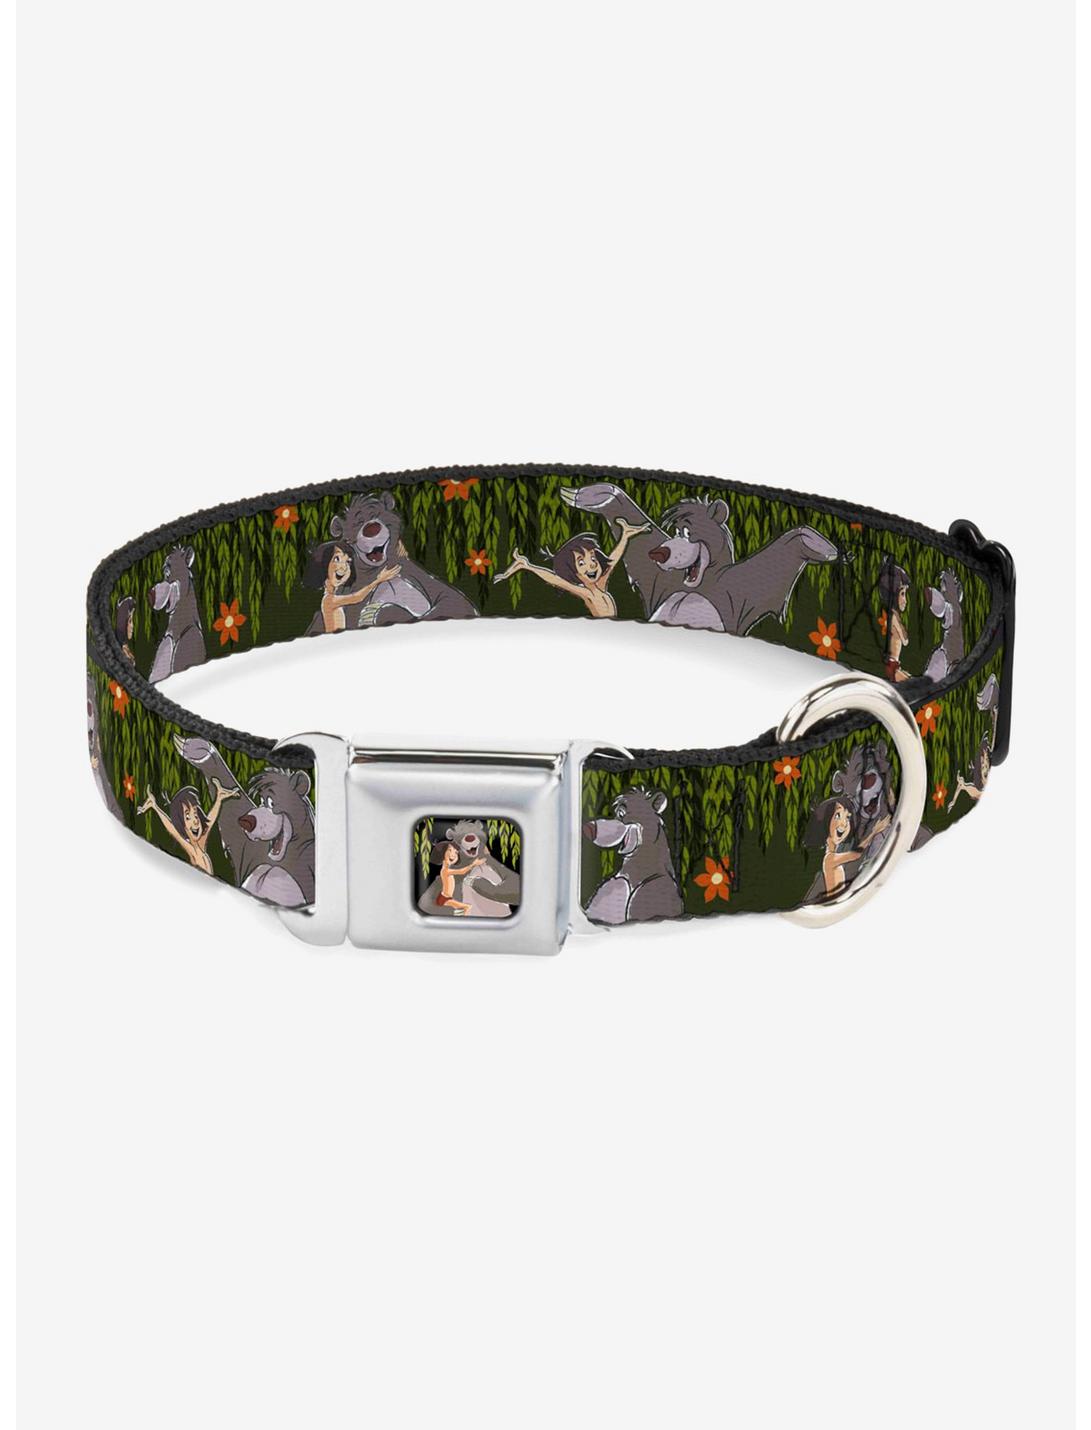 Disney The Jungle Book Mowgli Baloo Seatbelt Buckle Pet Collar, GREEN, hi-res